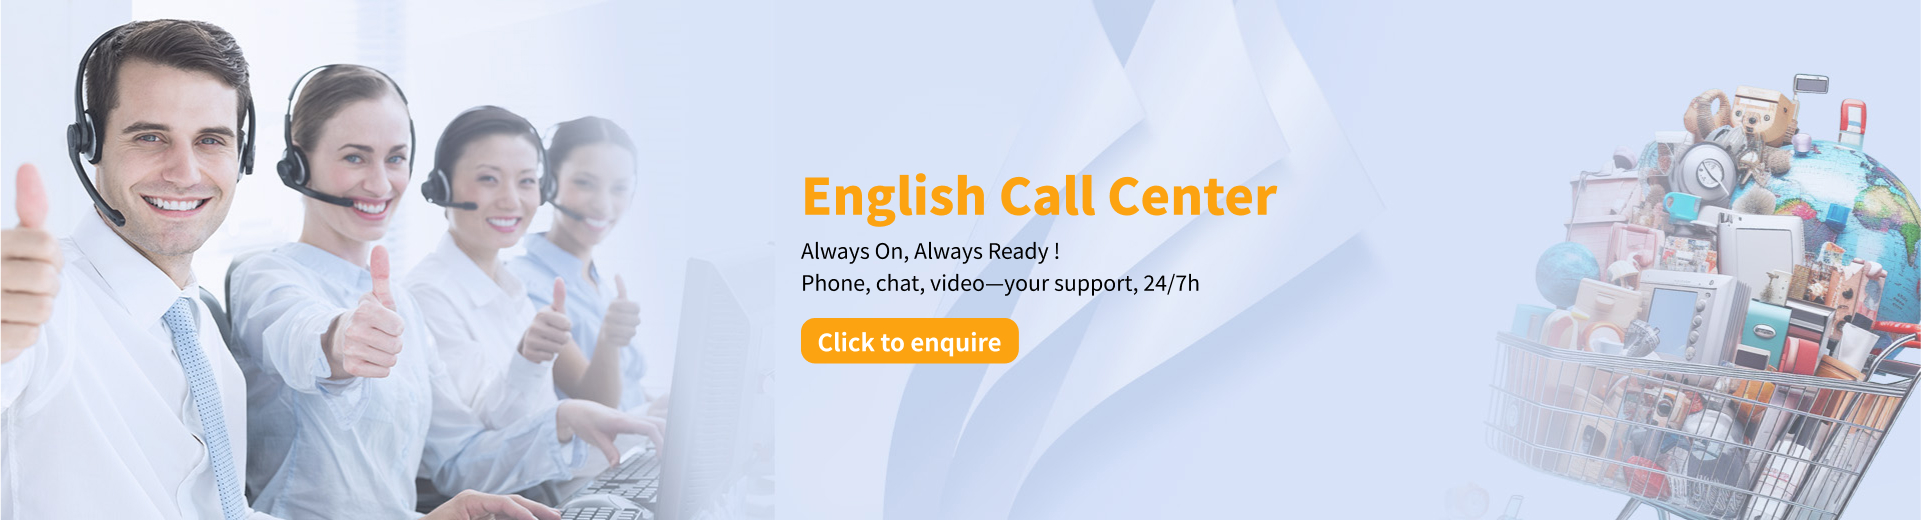 English Call Center